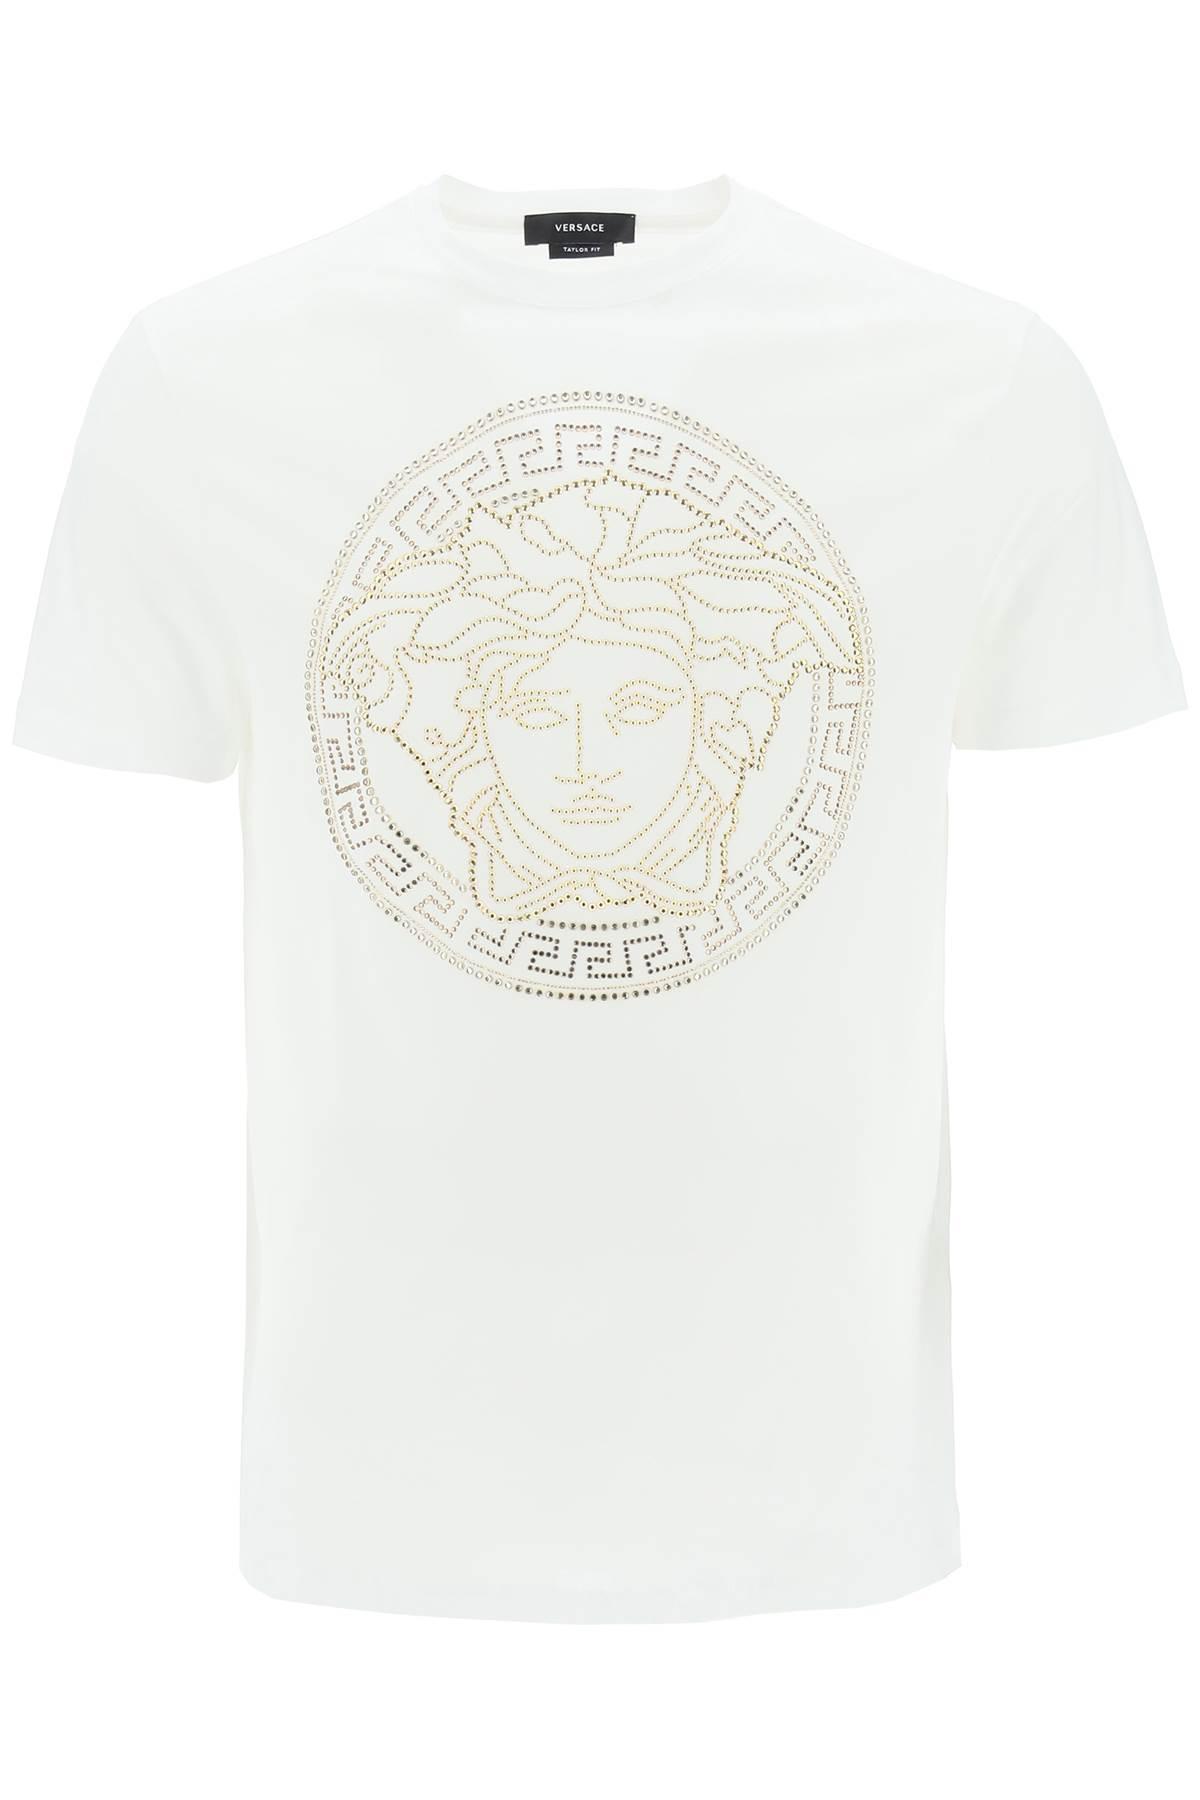 VERSACE Medusa-studded Taylor fit T-shirt